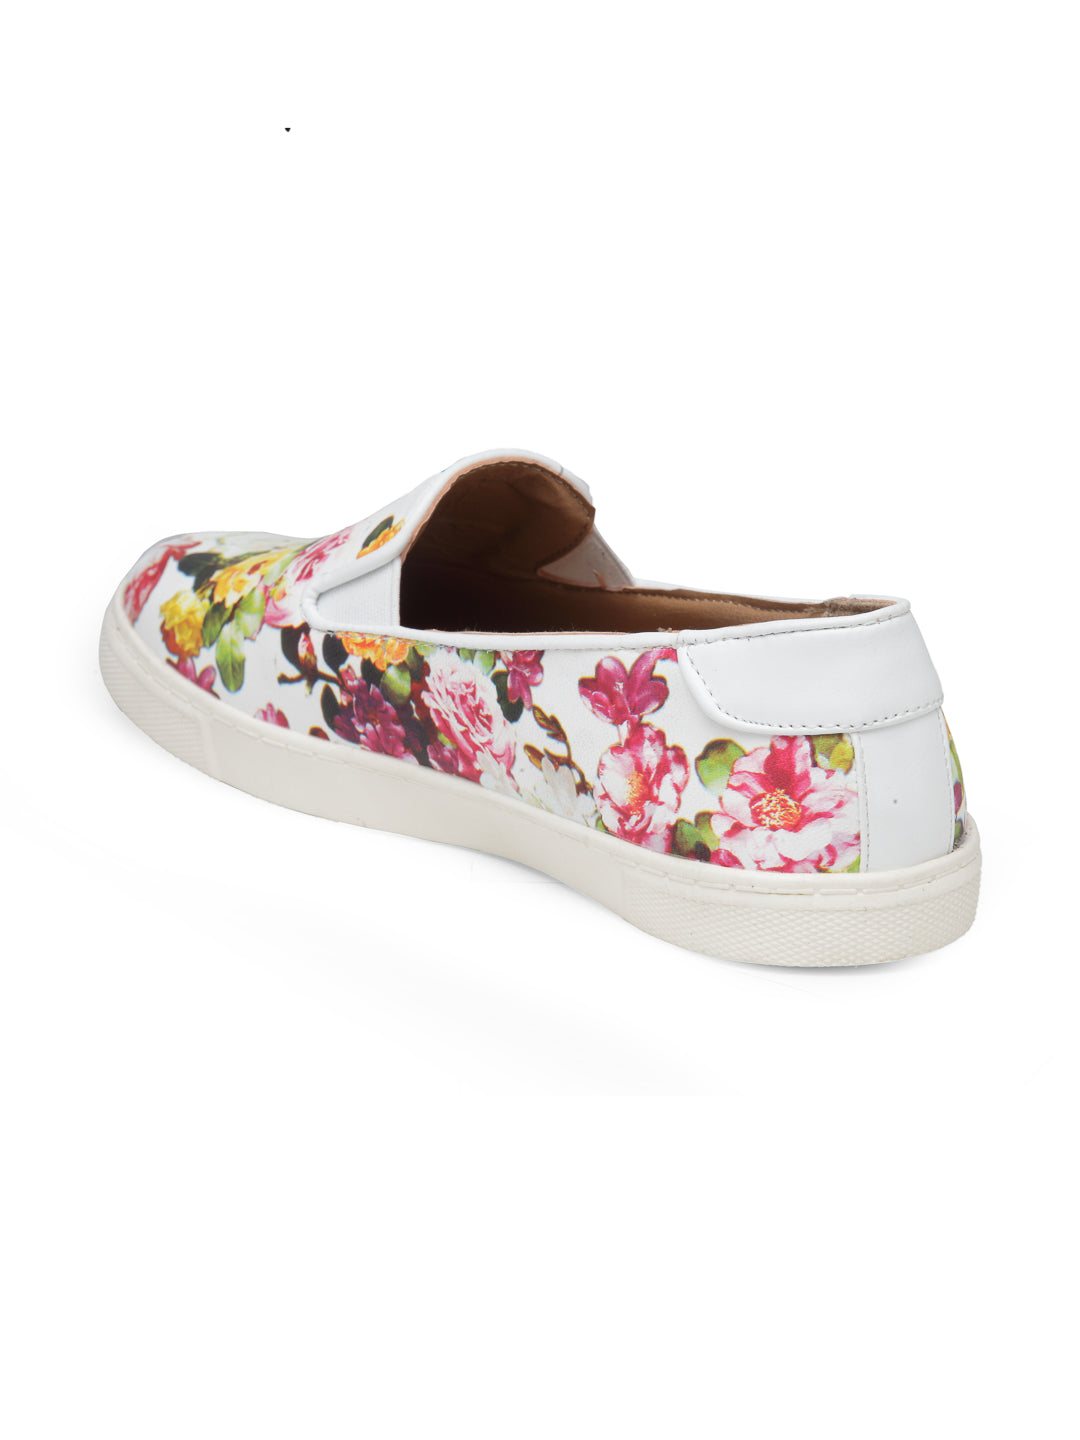 Floral Sneakers - Multicolor